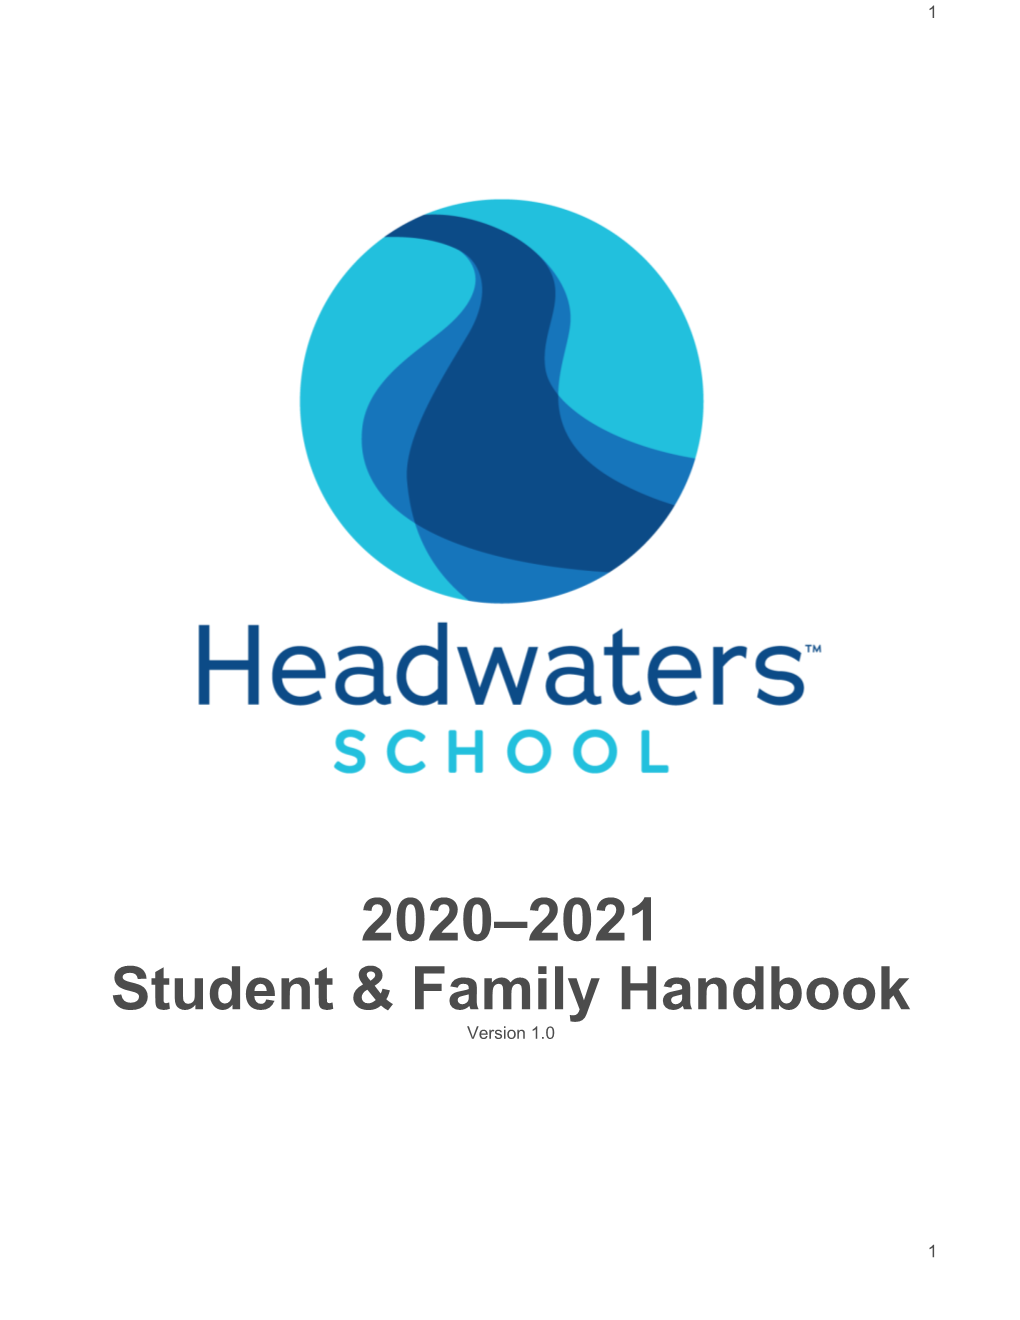 Headwaters Student & Family Handbook, 2020-2021, Version